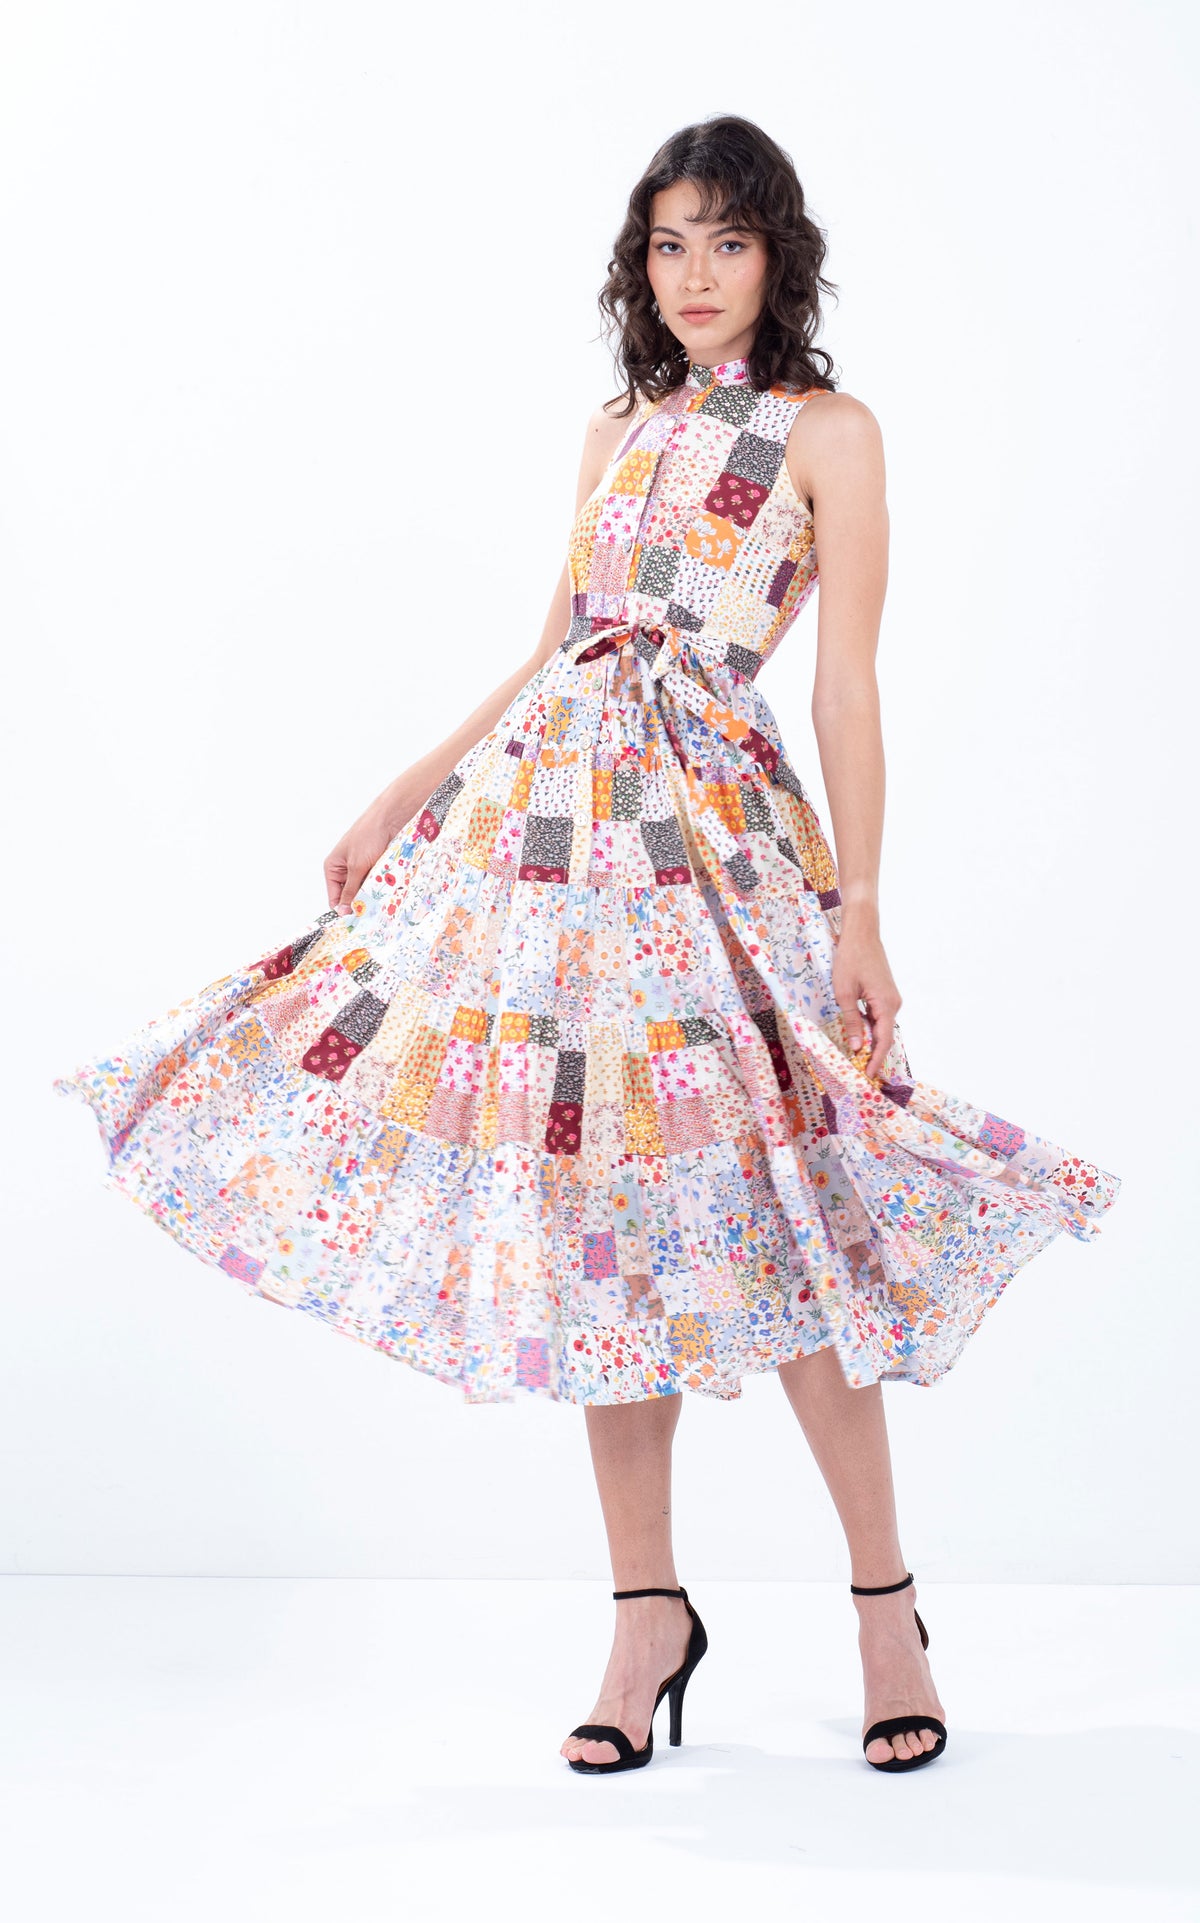 Mixed Print Cotton Maxi Dress